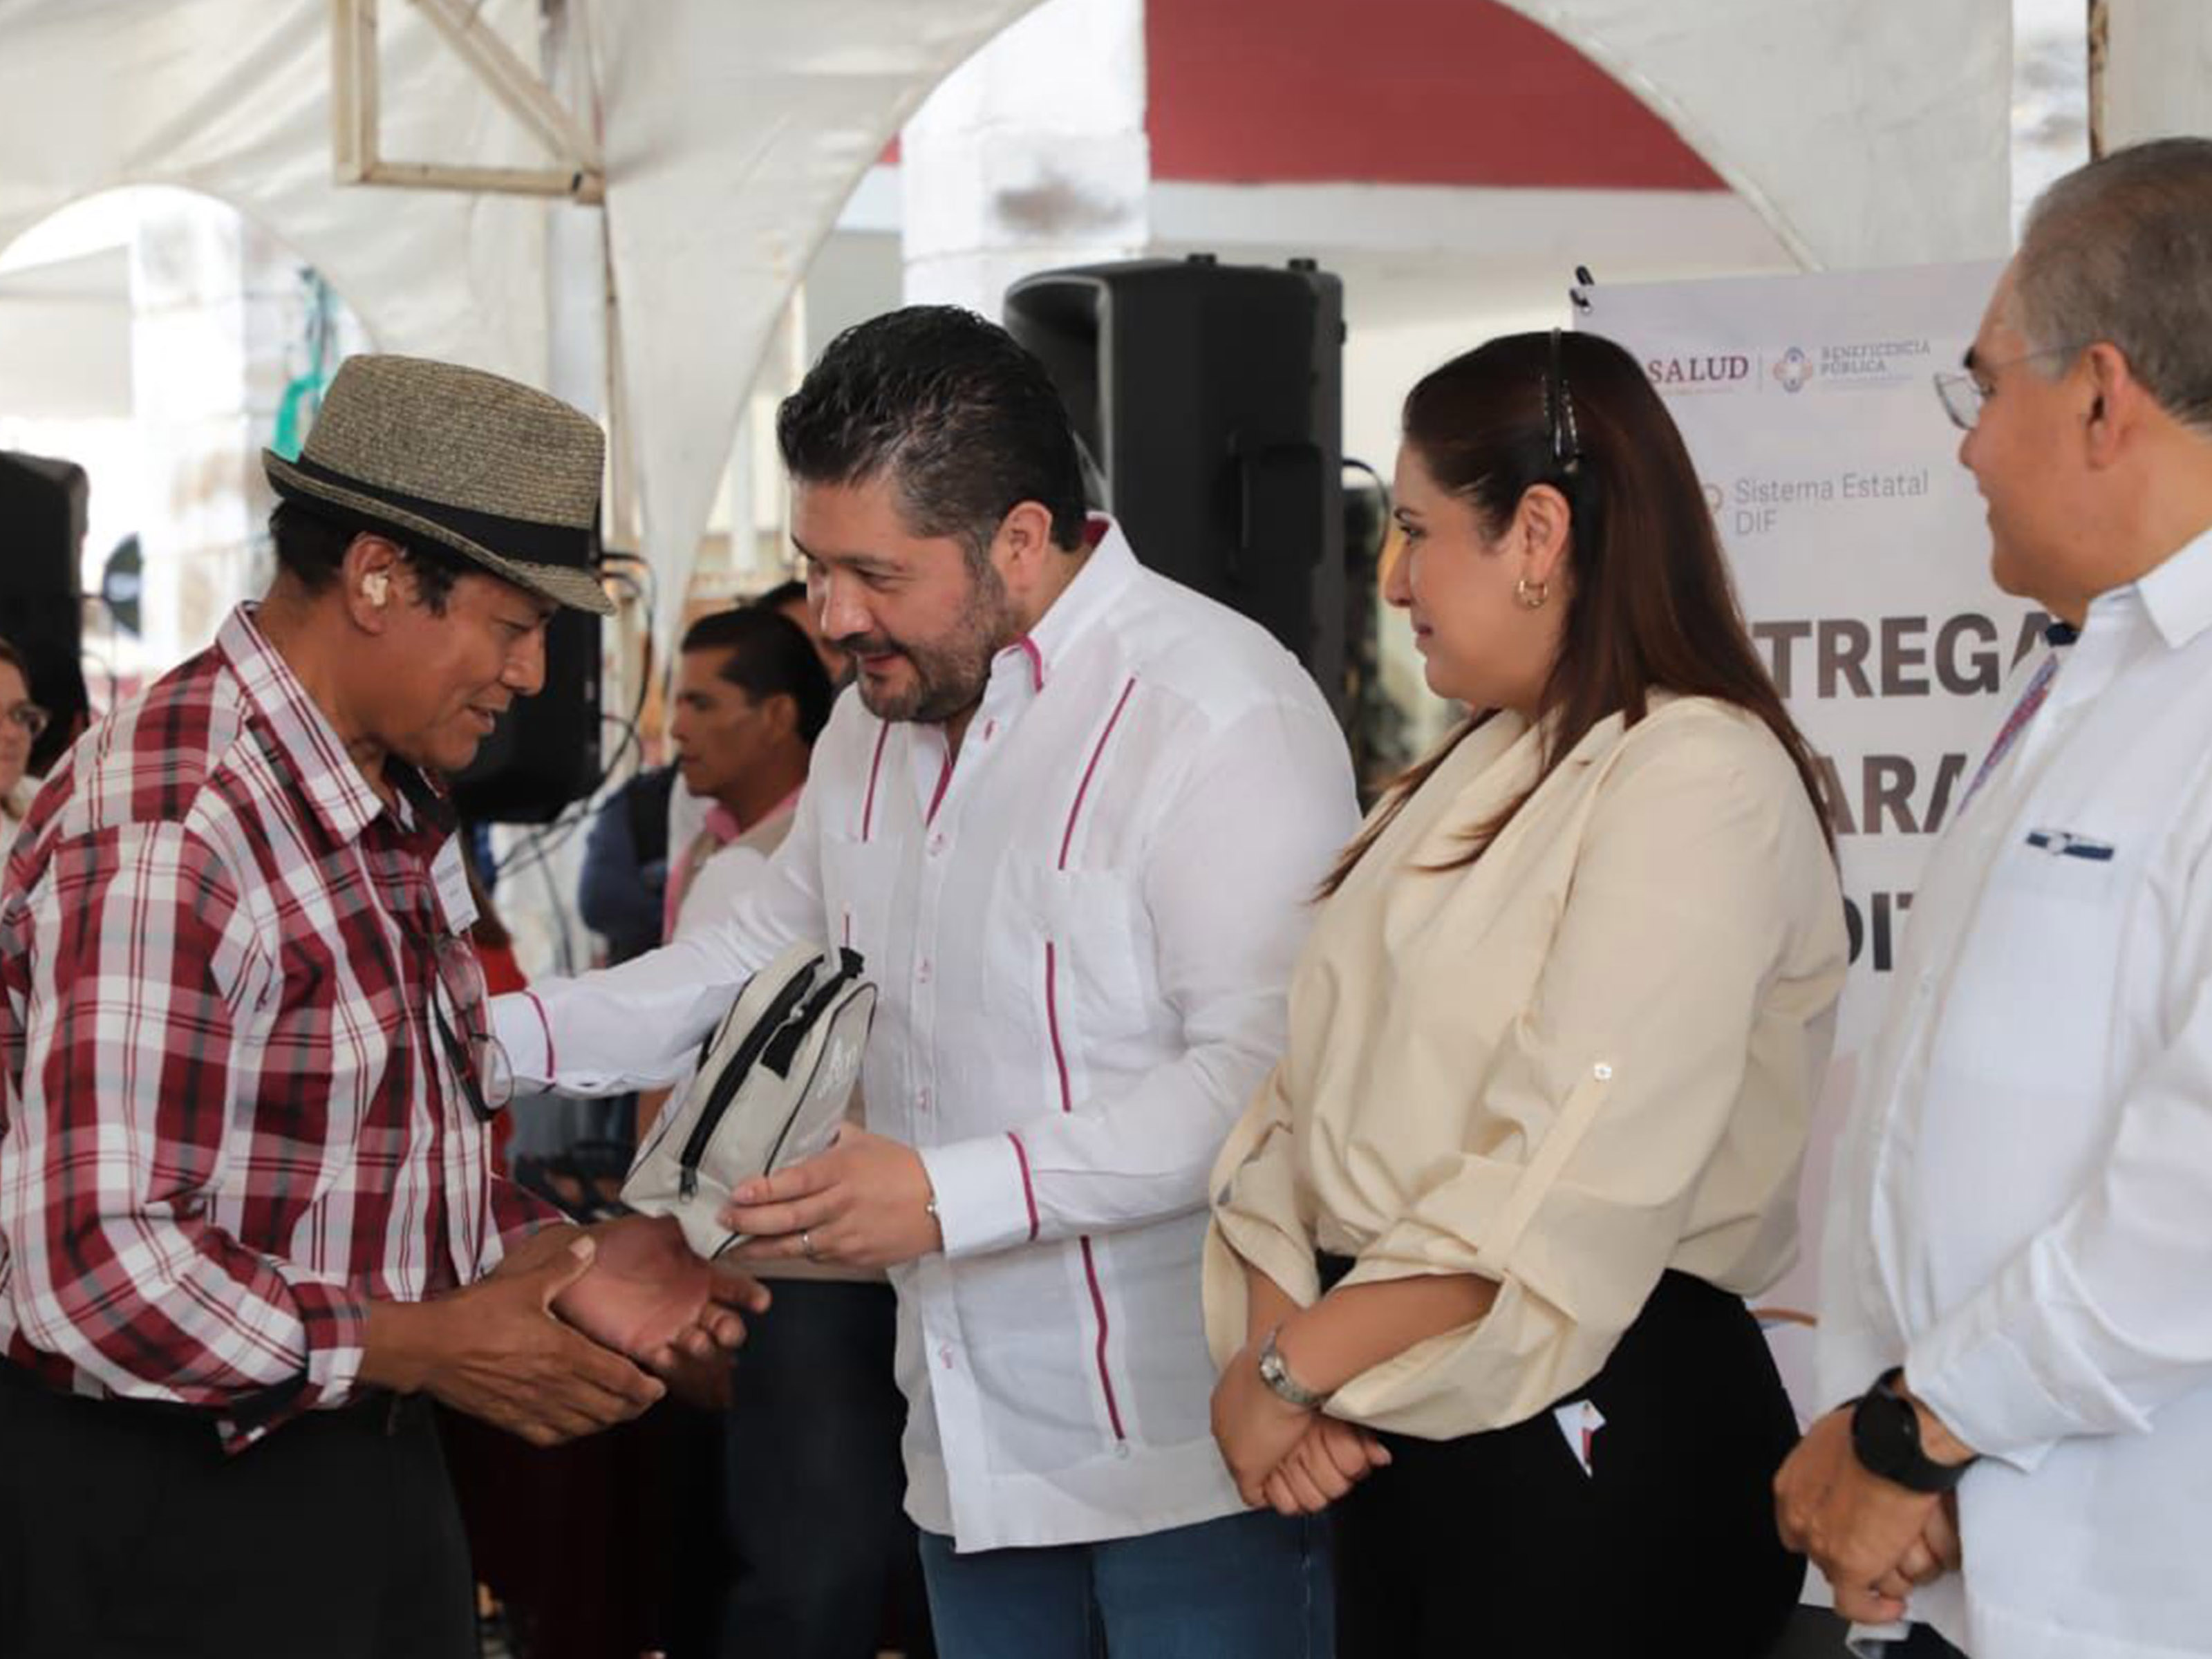 En Huauchinango, entrega SEDIF aparatos auditivos a 125 personas